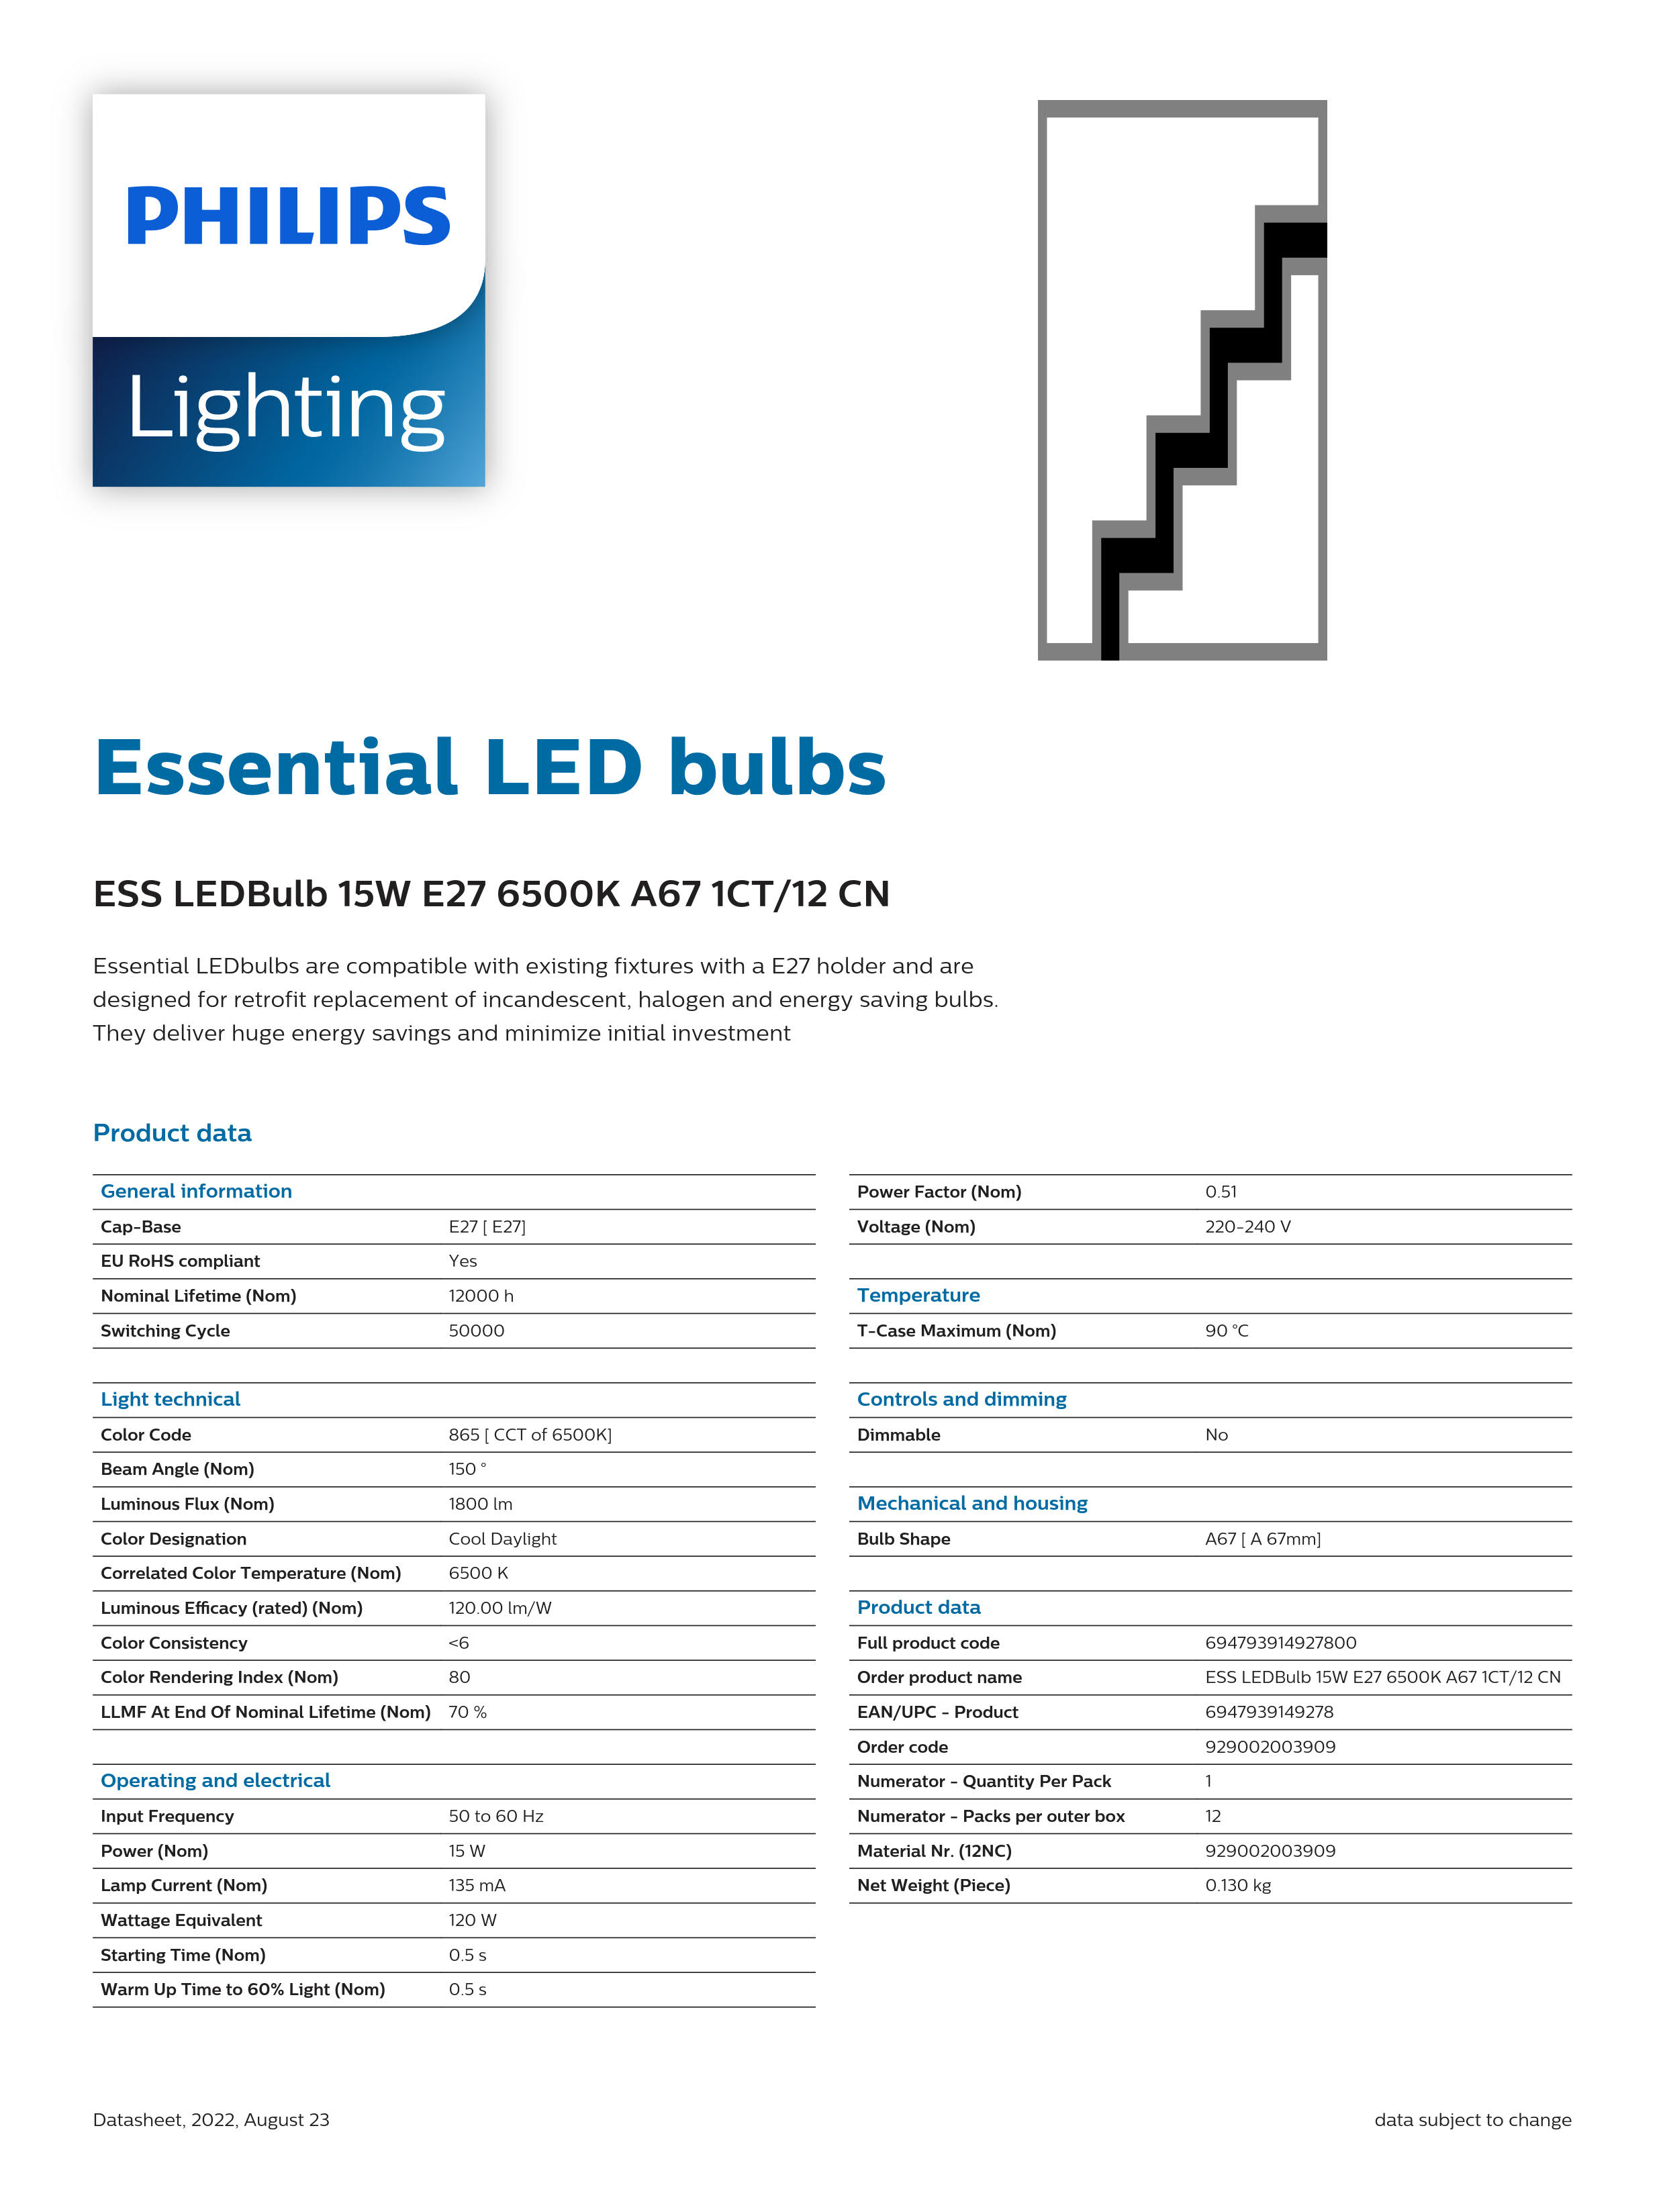 PHILIPS Essential LED bulbs 15W E27 6500K 230V 1CT/12 CN 929002003909